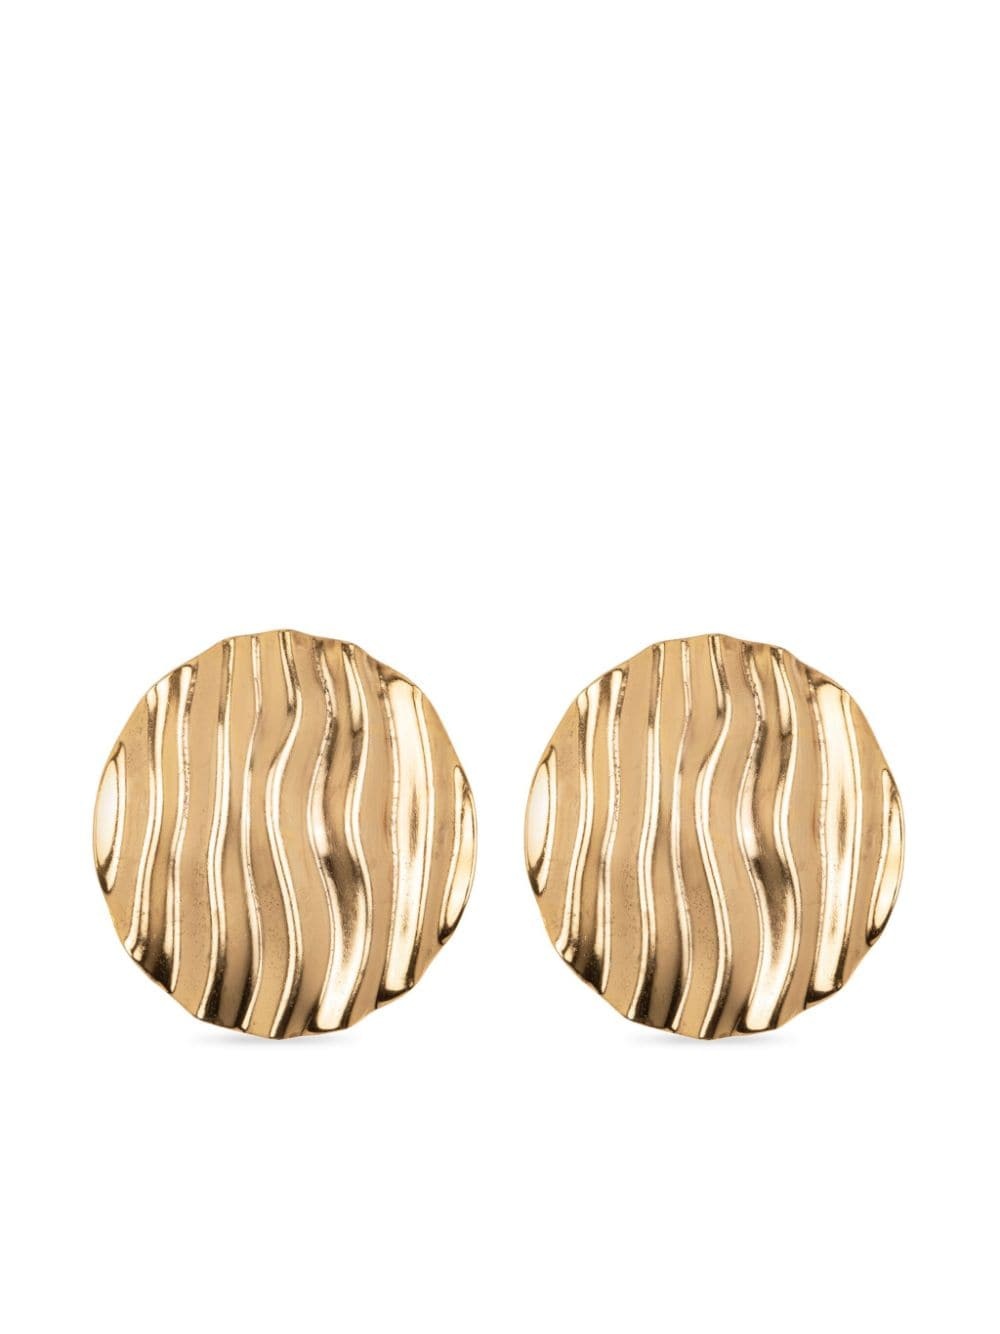 Rio stud earrings - 1